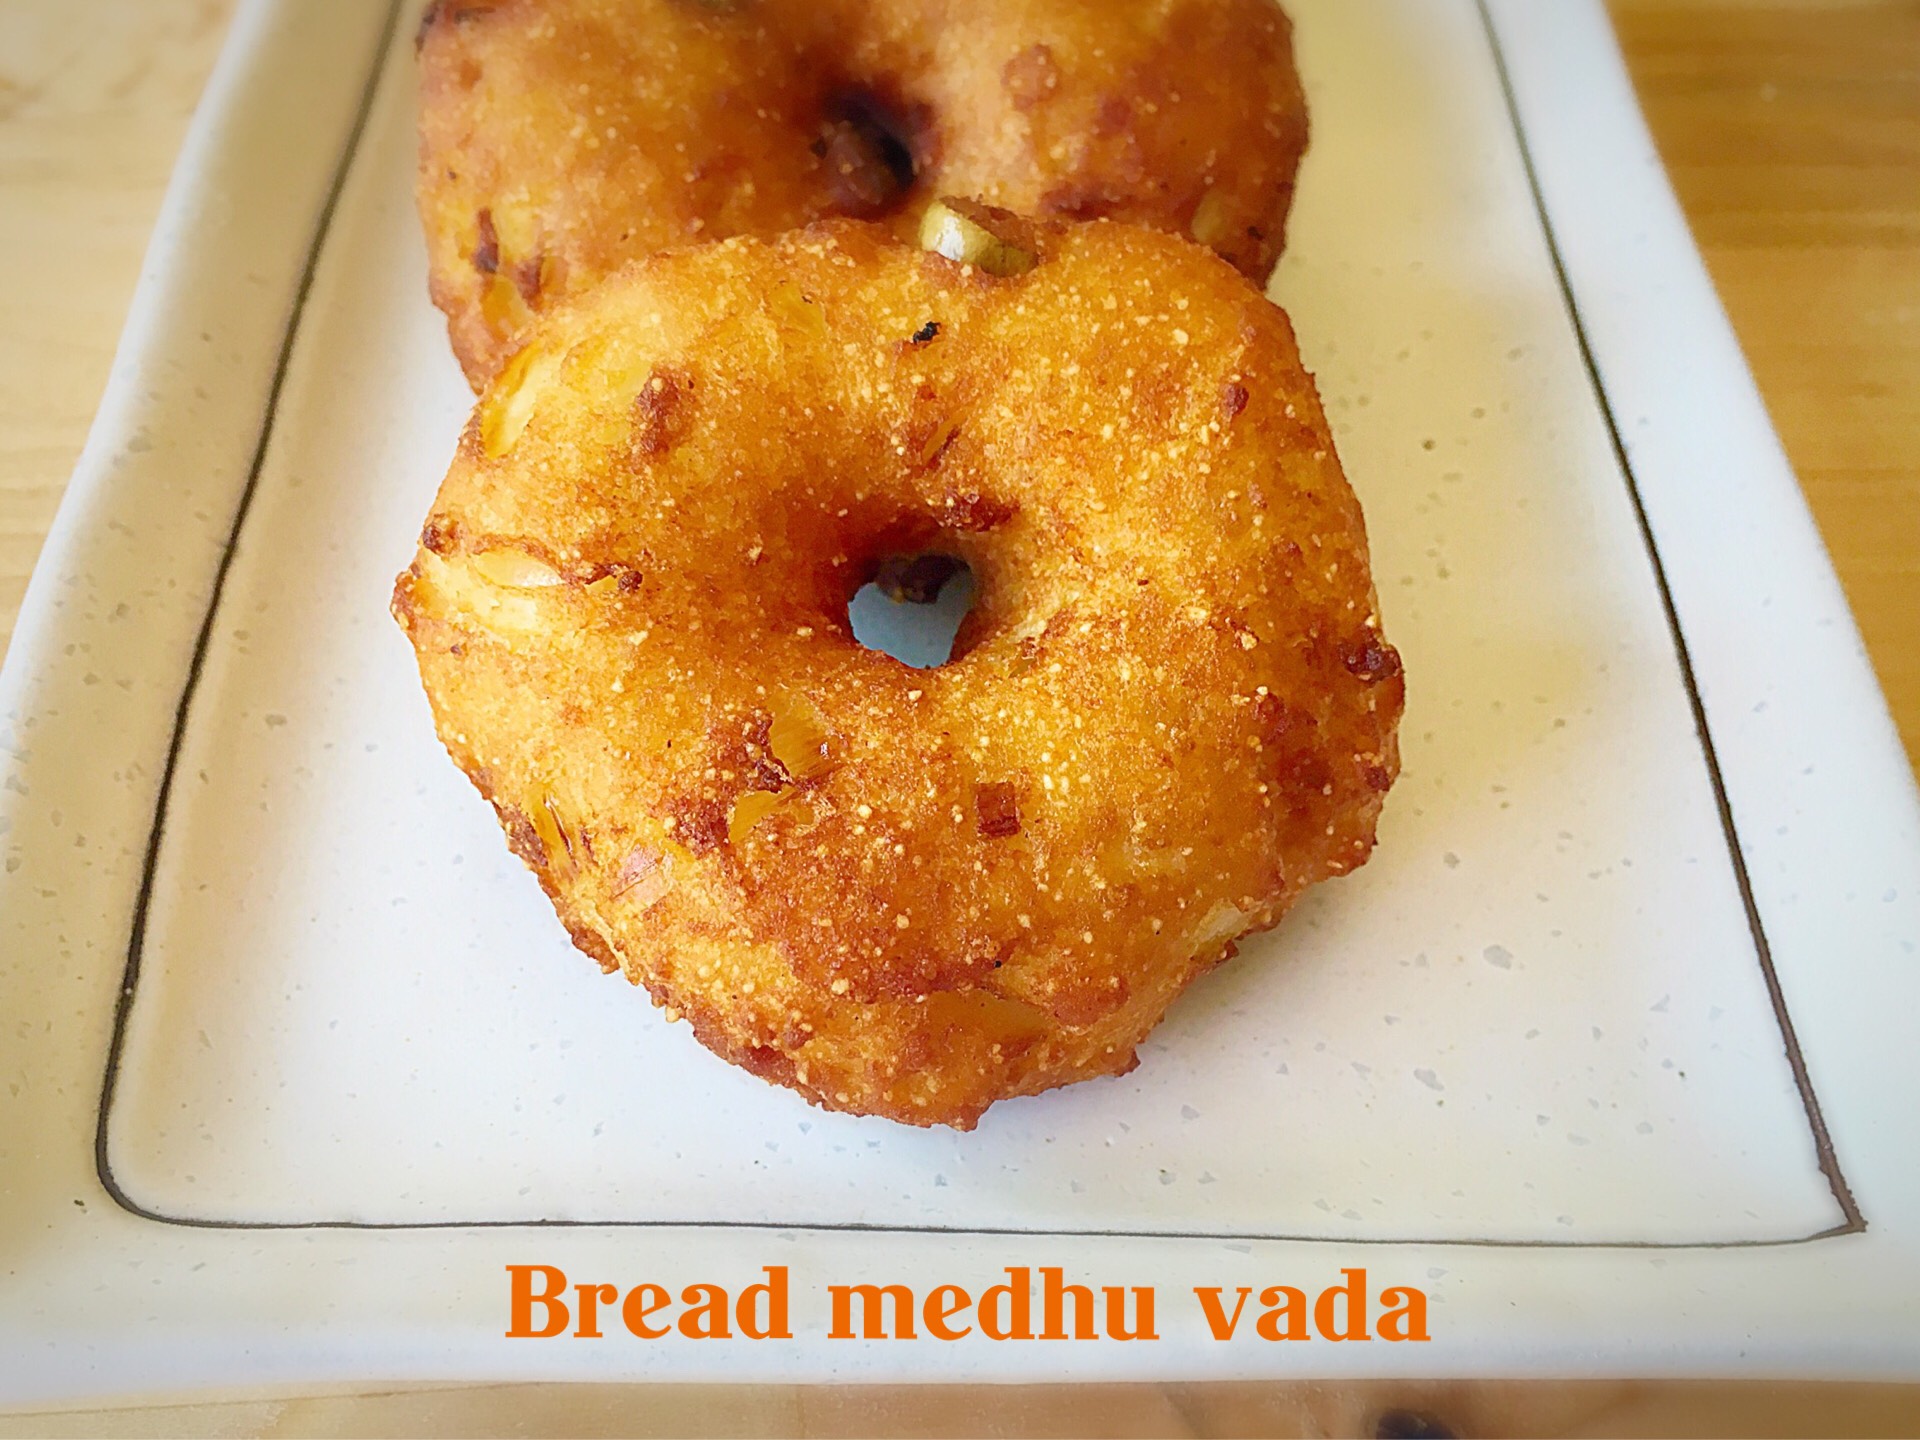 Bread medhu vada,vada,south indian snacks, snacks, fried snacks, bread, bread vada, instant medhu vada, instant bread vada, easy vada, vada recipe, quick vada recipe, vada recipe, instant medhu vada recipe, bread snacks,easy snacks,quick snacks,quick vada,leftover bread,kid friendly snacks,evening snacks,chutney, sambar,